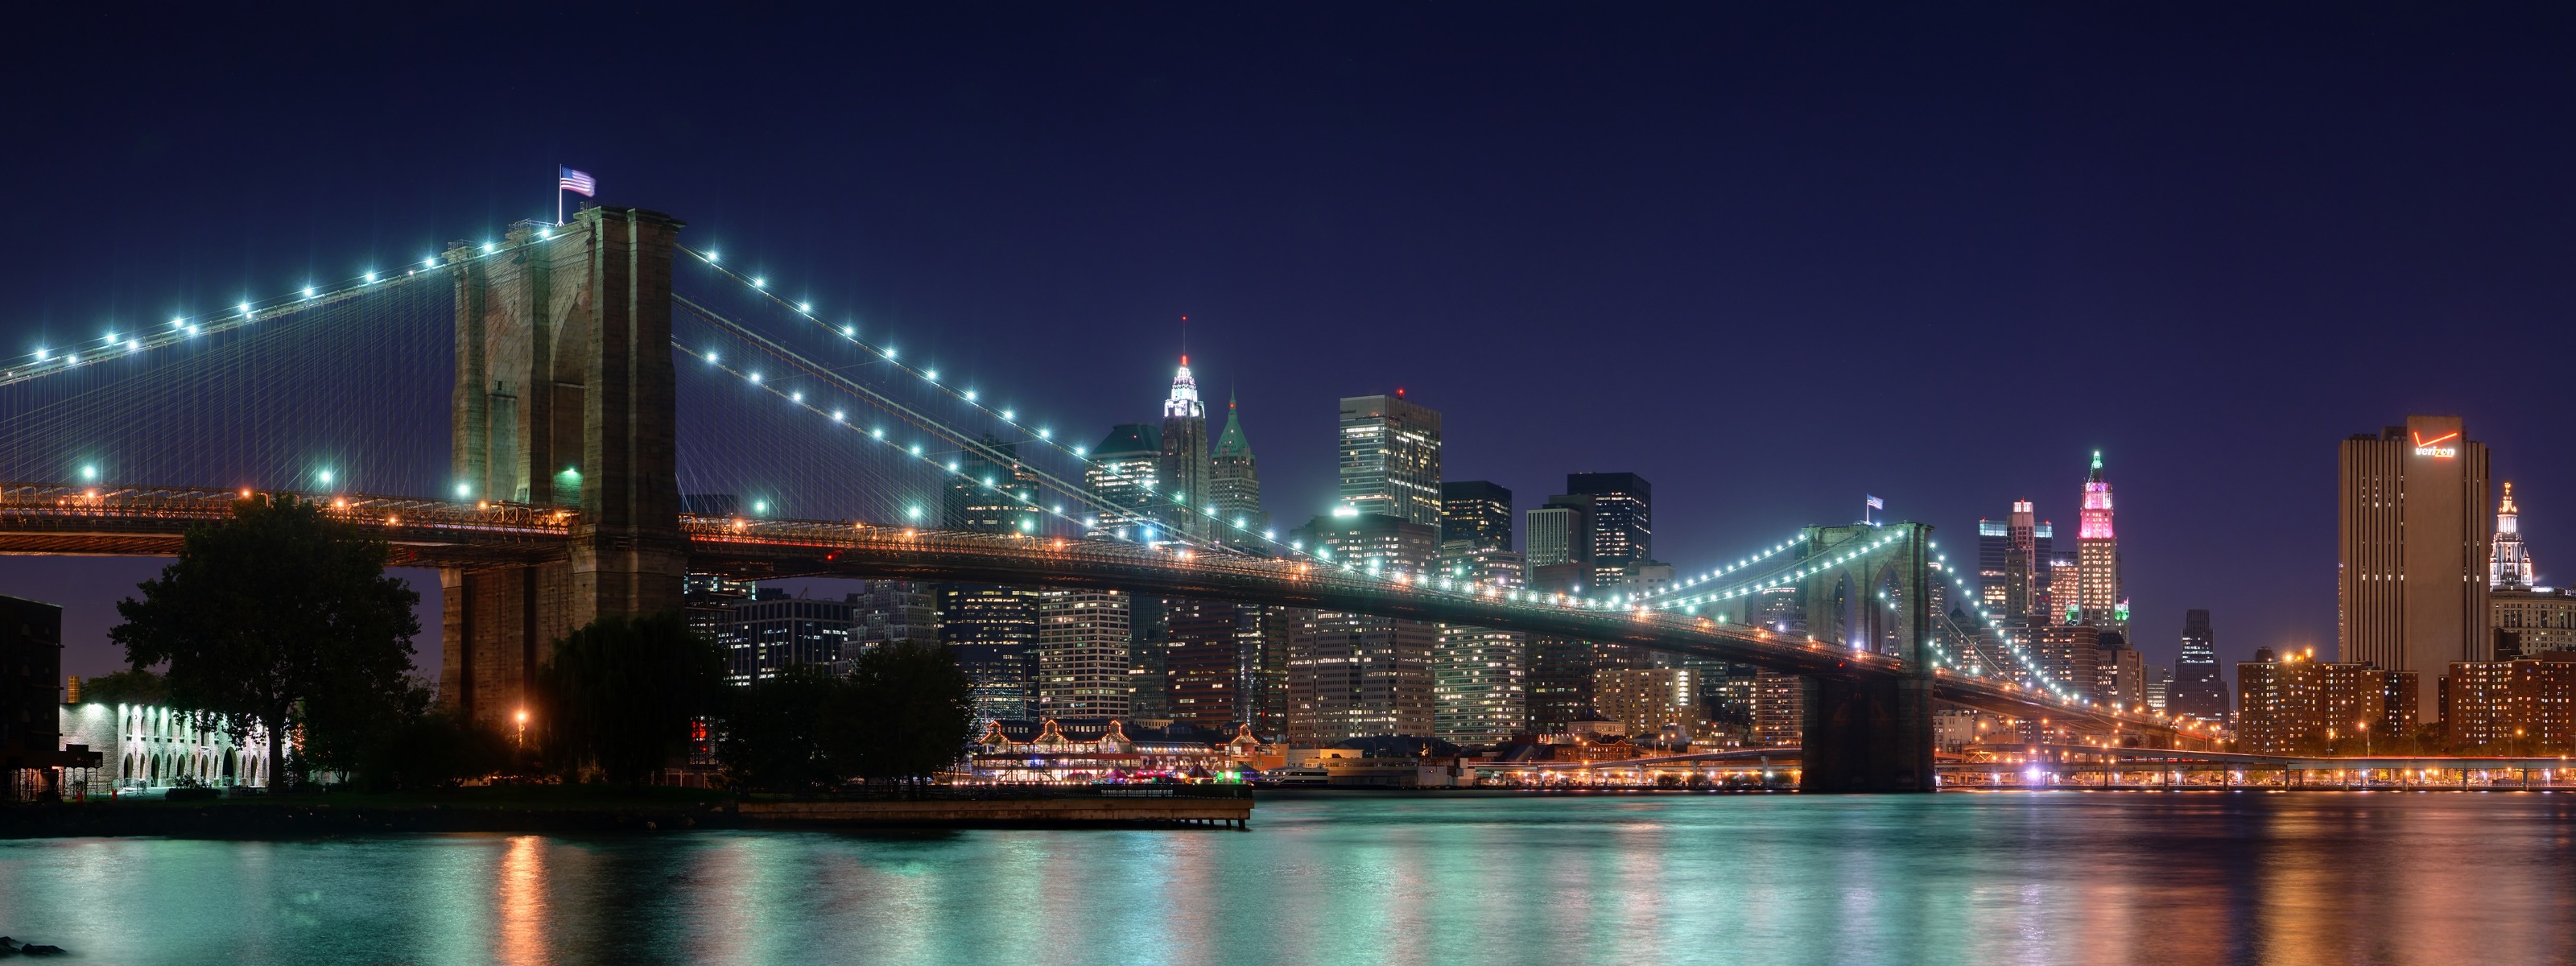 Top 21 Brooklyn Bridge Wallpapers